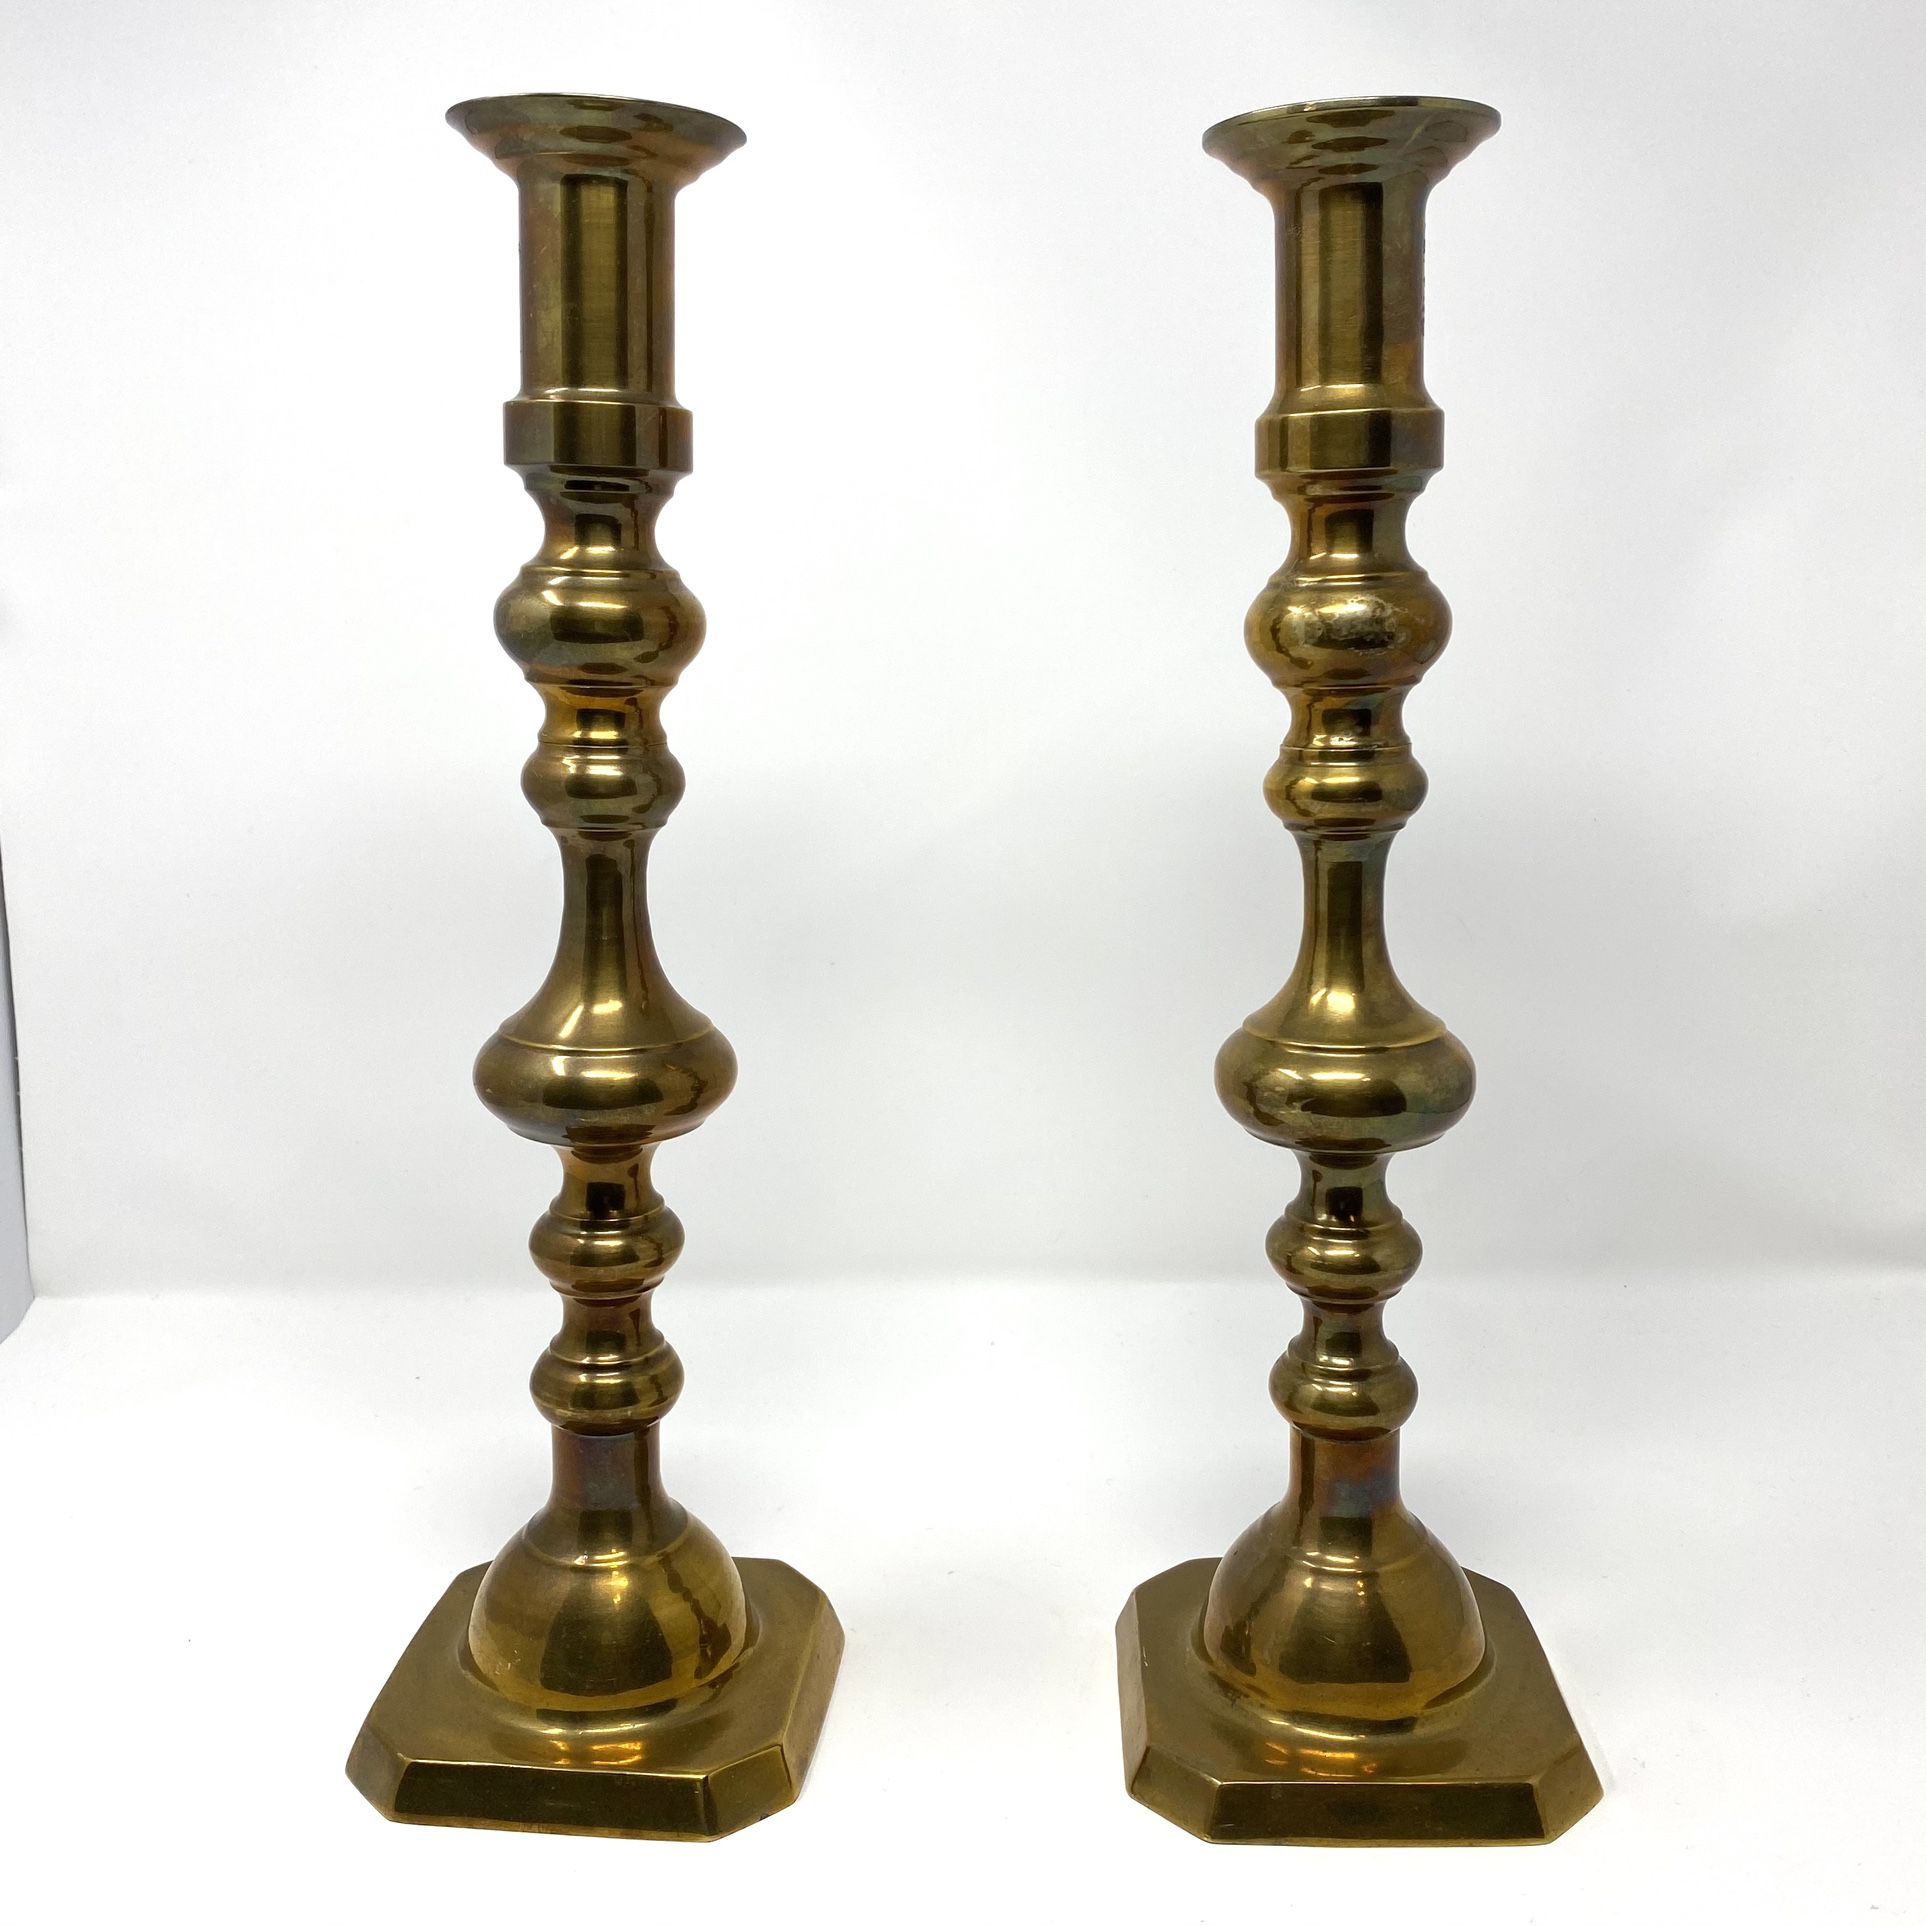  Vintage solid brass candlesticks  15.5” Tall